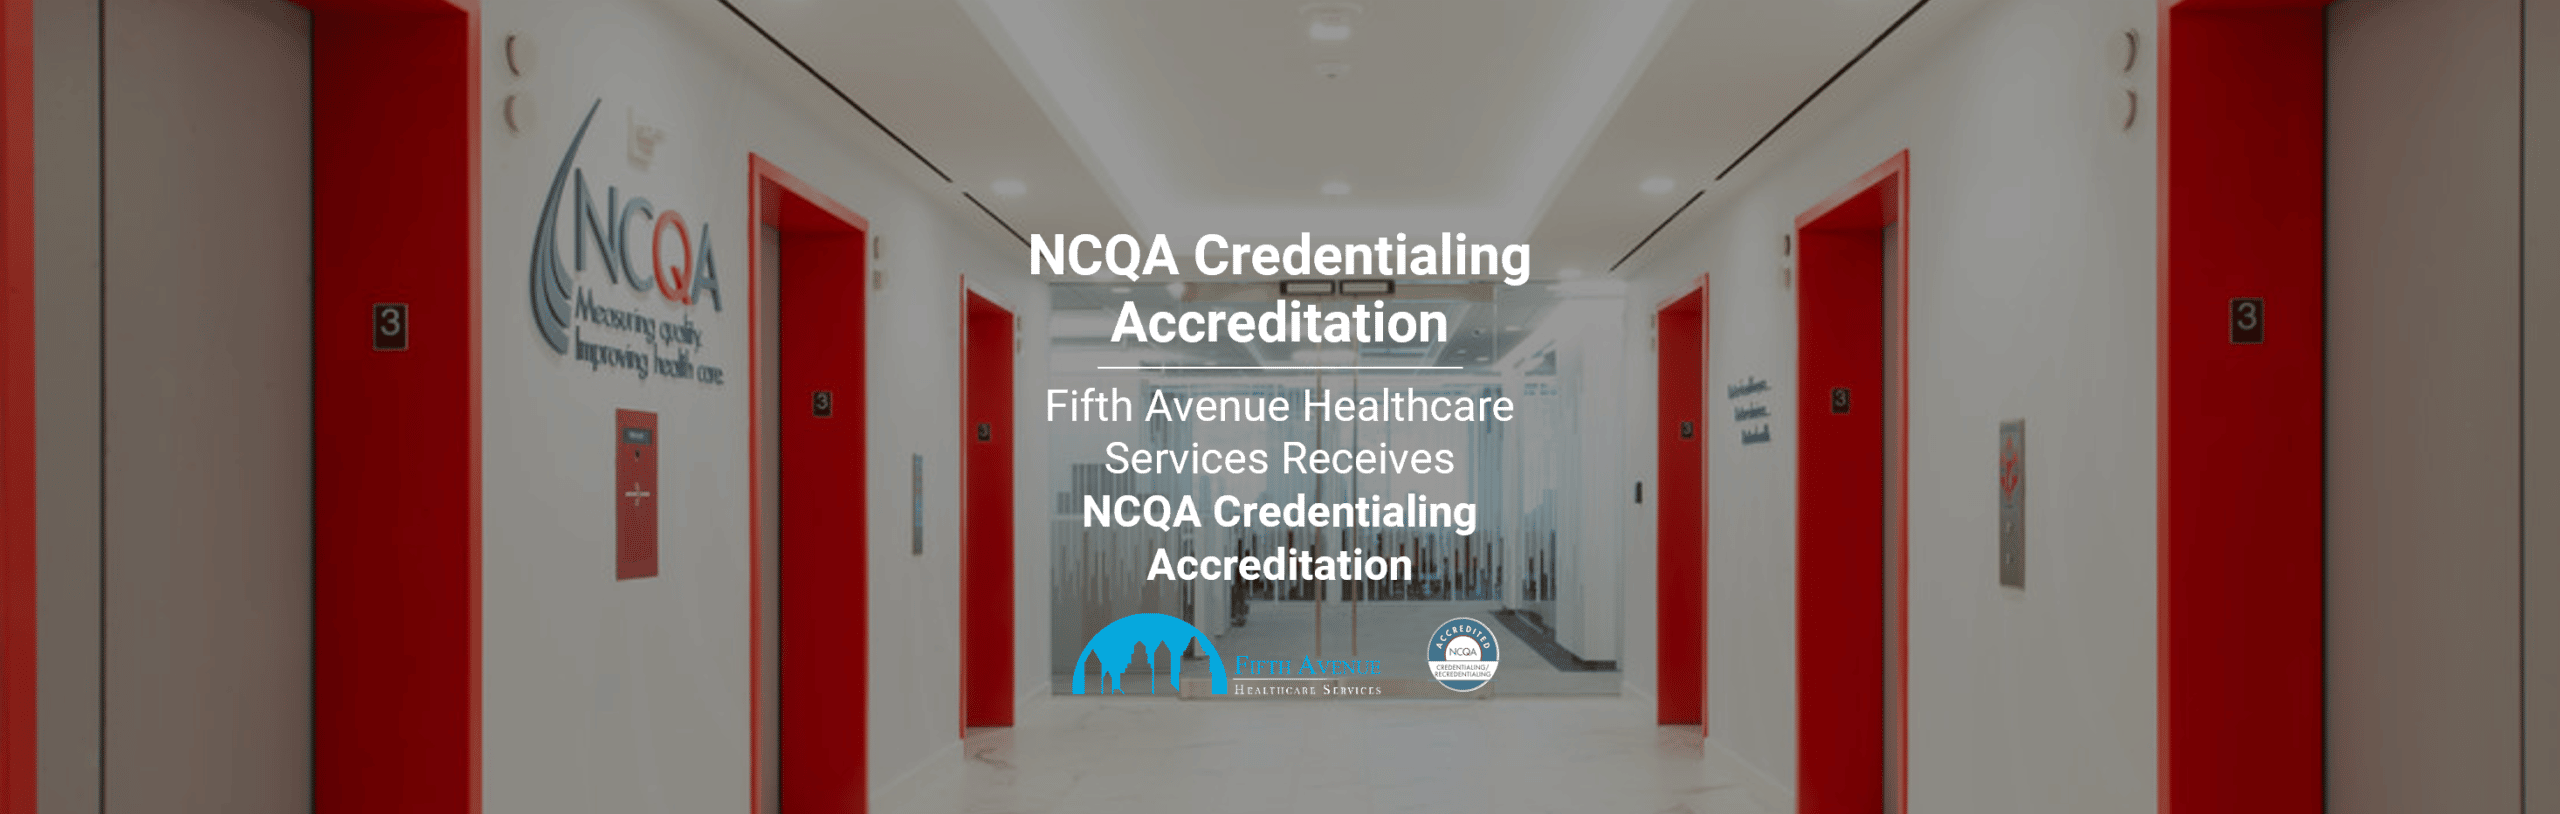 FifthAvenueHealthcareServices.com Fifth Avenue Healthcare Services Receives NCQA Credentialing Accreditation 2022